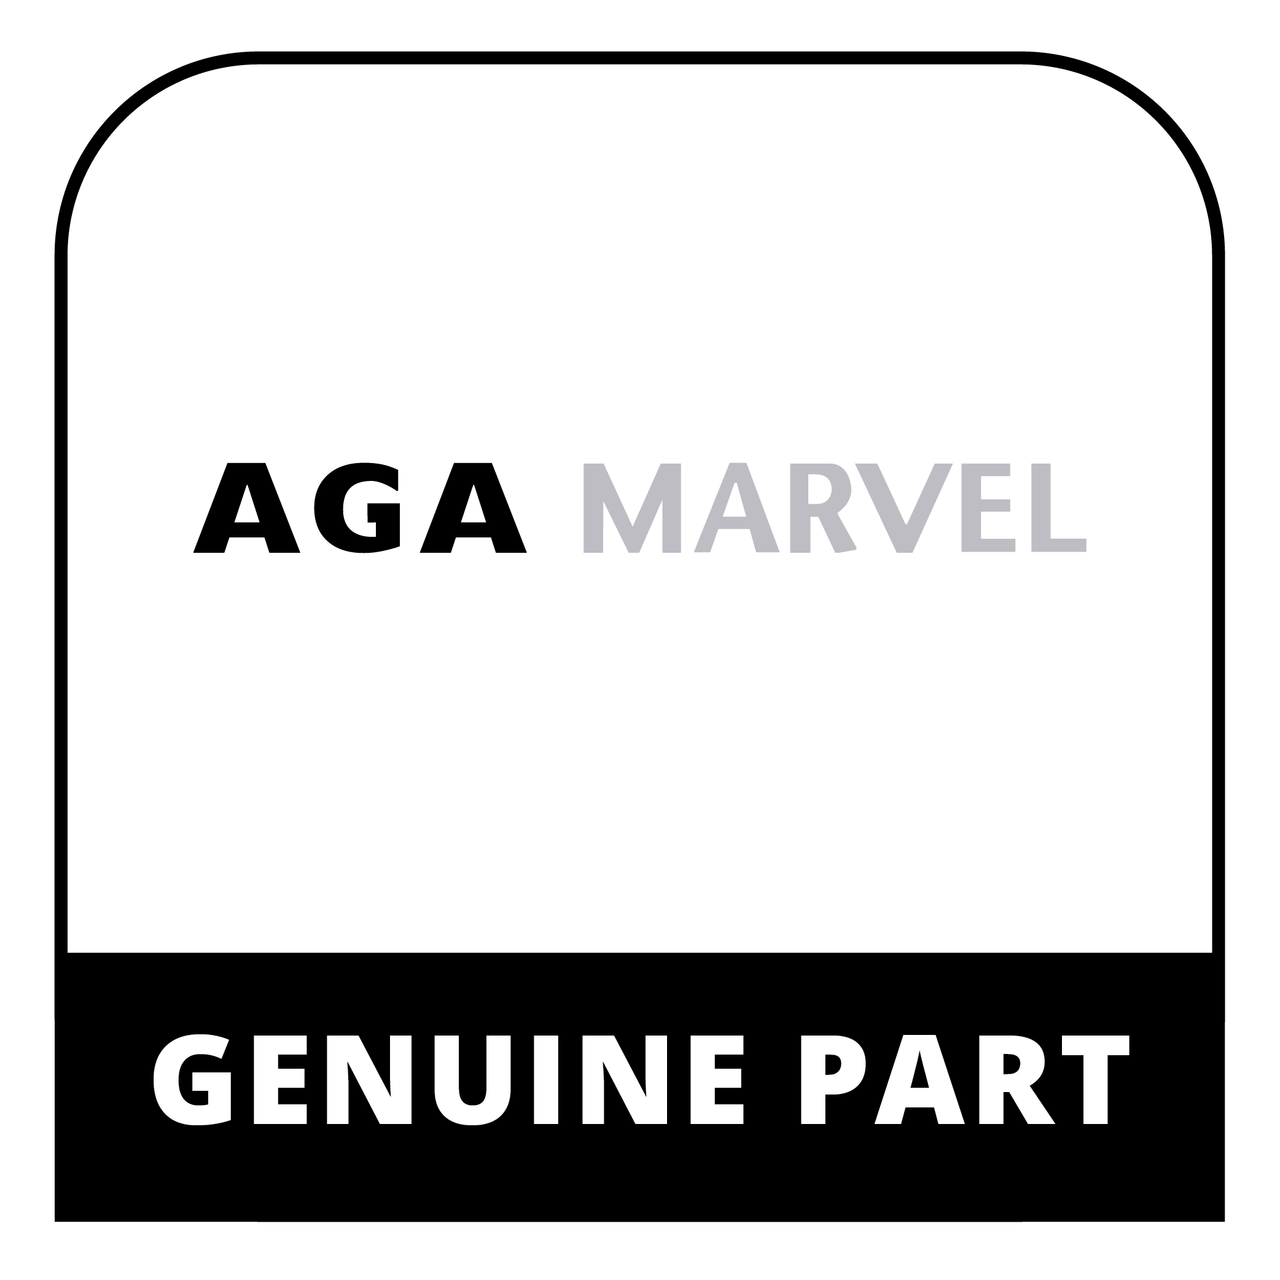 AGA Marvel RG2M310037 - Shield Gas Valve Gdo - Genuine AGA Marvel Part